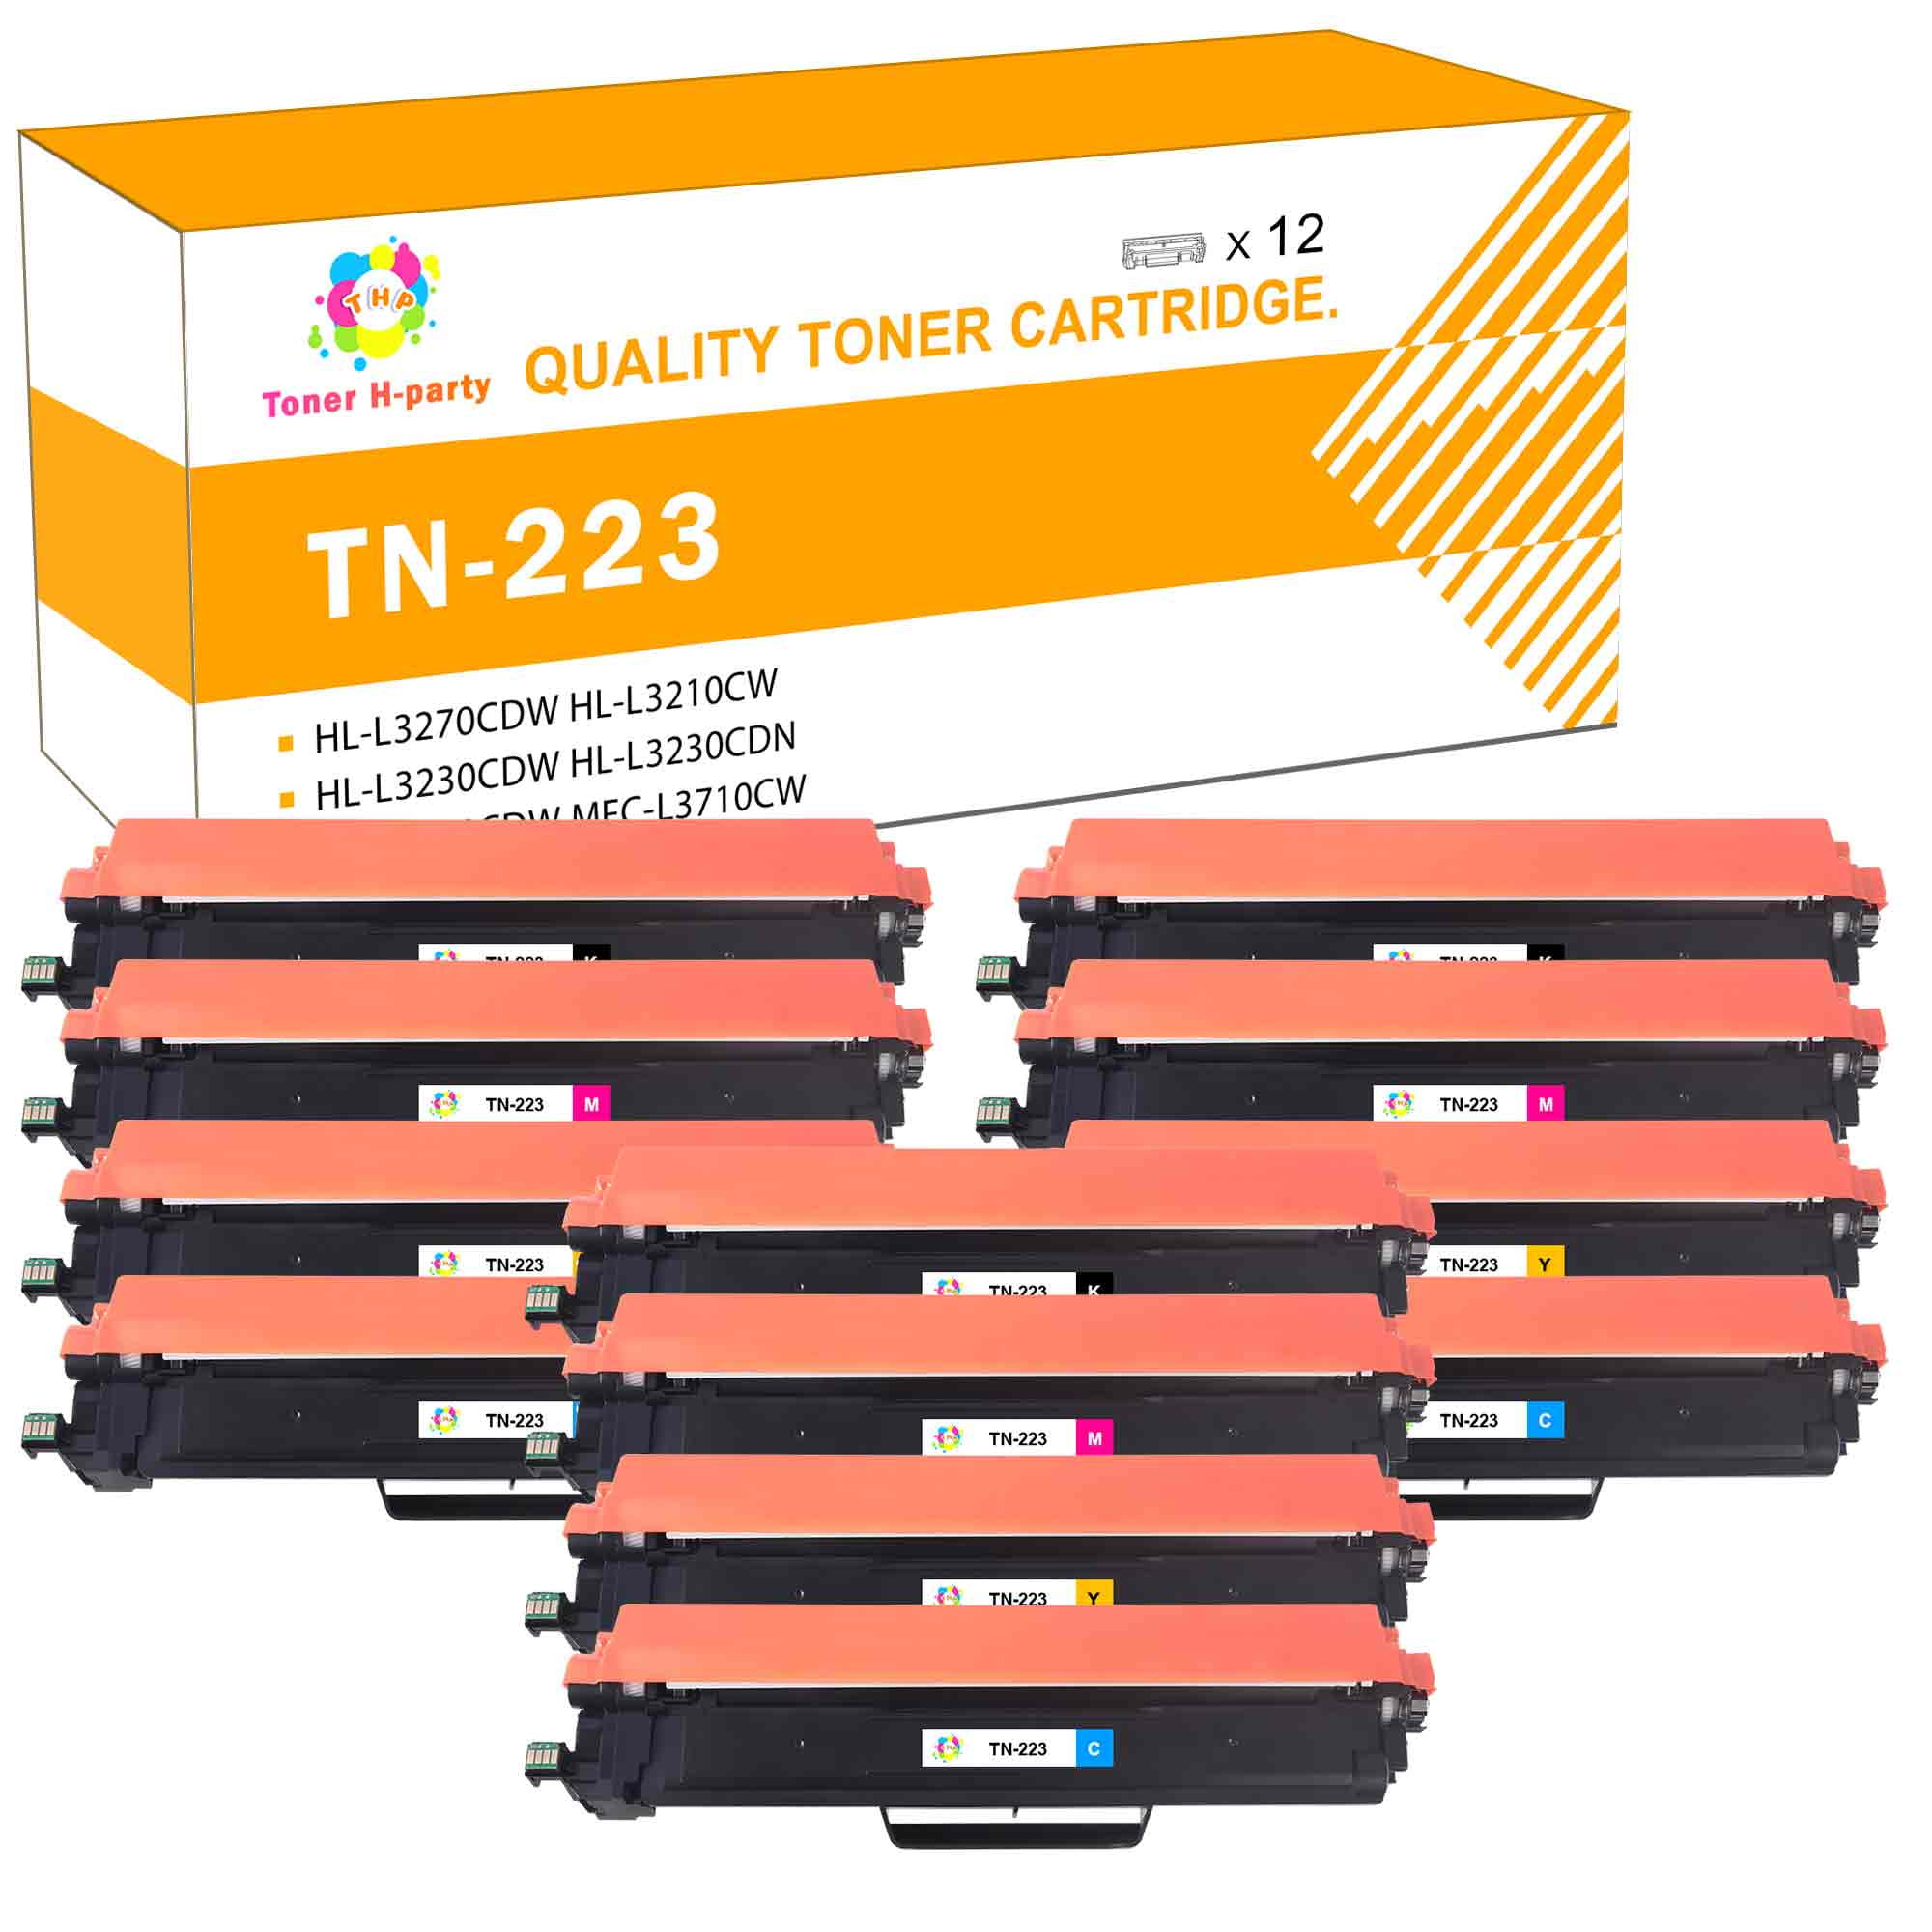 Toner H-Party 10-Pack Compatible Toner Cartridge for Brother TN-223BK  TN-223C TN-223M TN-223Y HL-L3270CDW L3210CW L3230CDW L3230CDN,HL-L3290CDW  MFC-L3710CW MFC-L3750CDW (4BK + 2C + 2M + 2Y) 